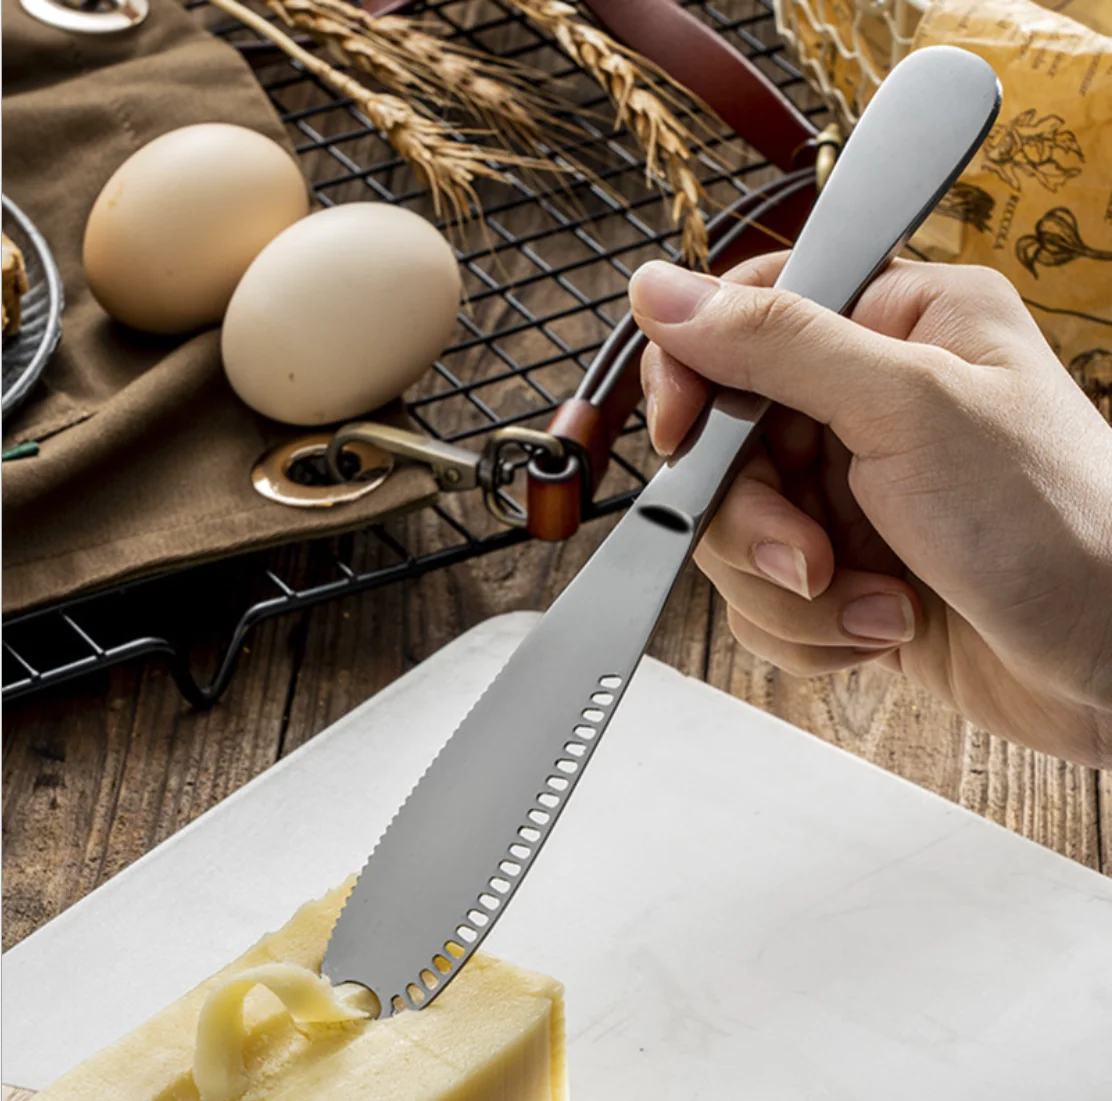 
Stainless Steel Butter Spreader Knife 3 in 1 Kitchen Gadgets Curler Butter Grater Multi-Function Butter Spreader and Grater 